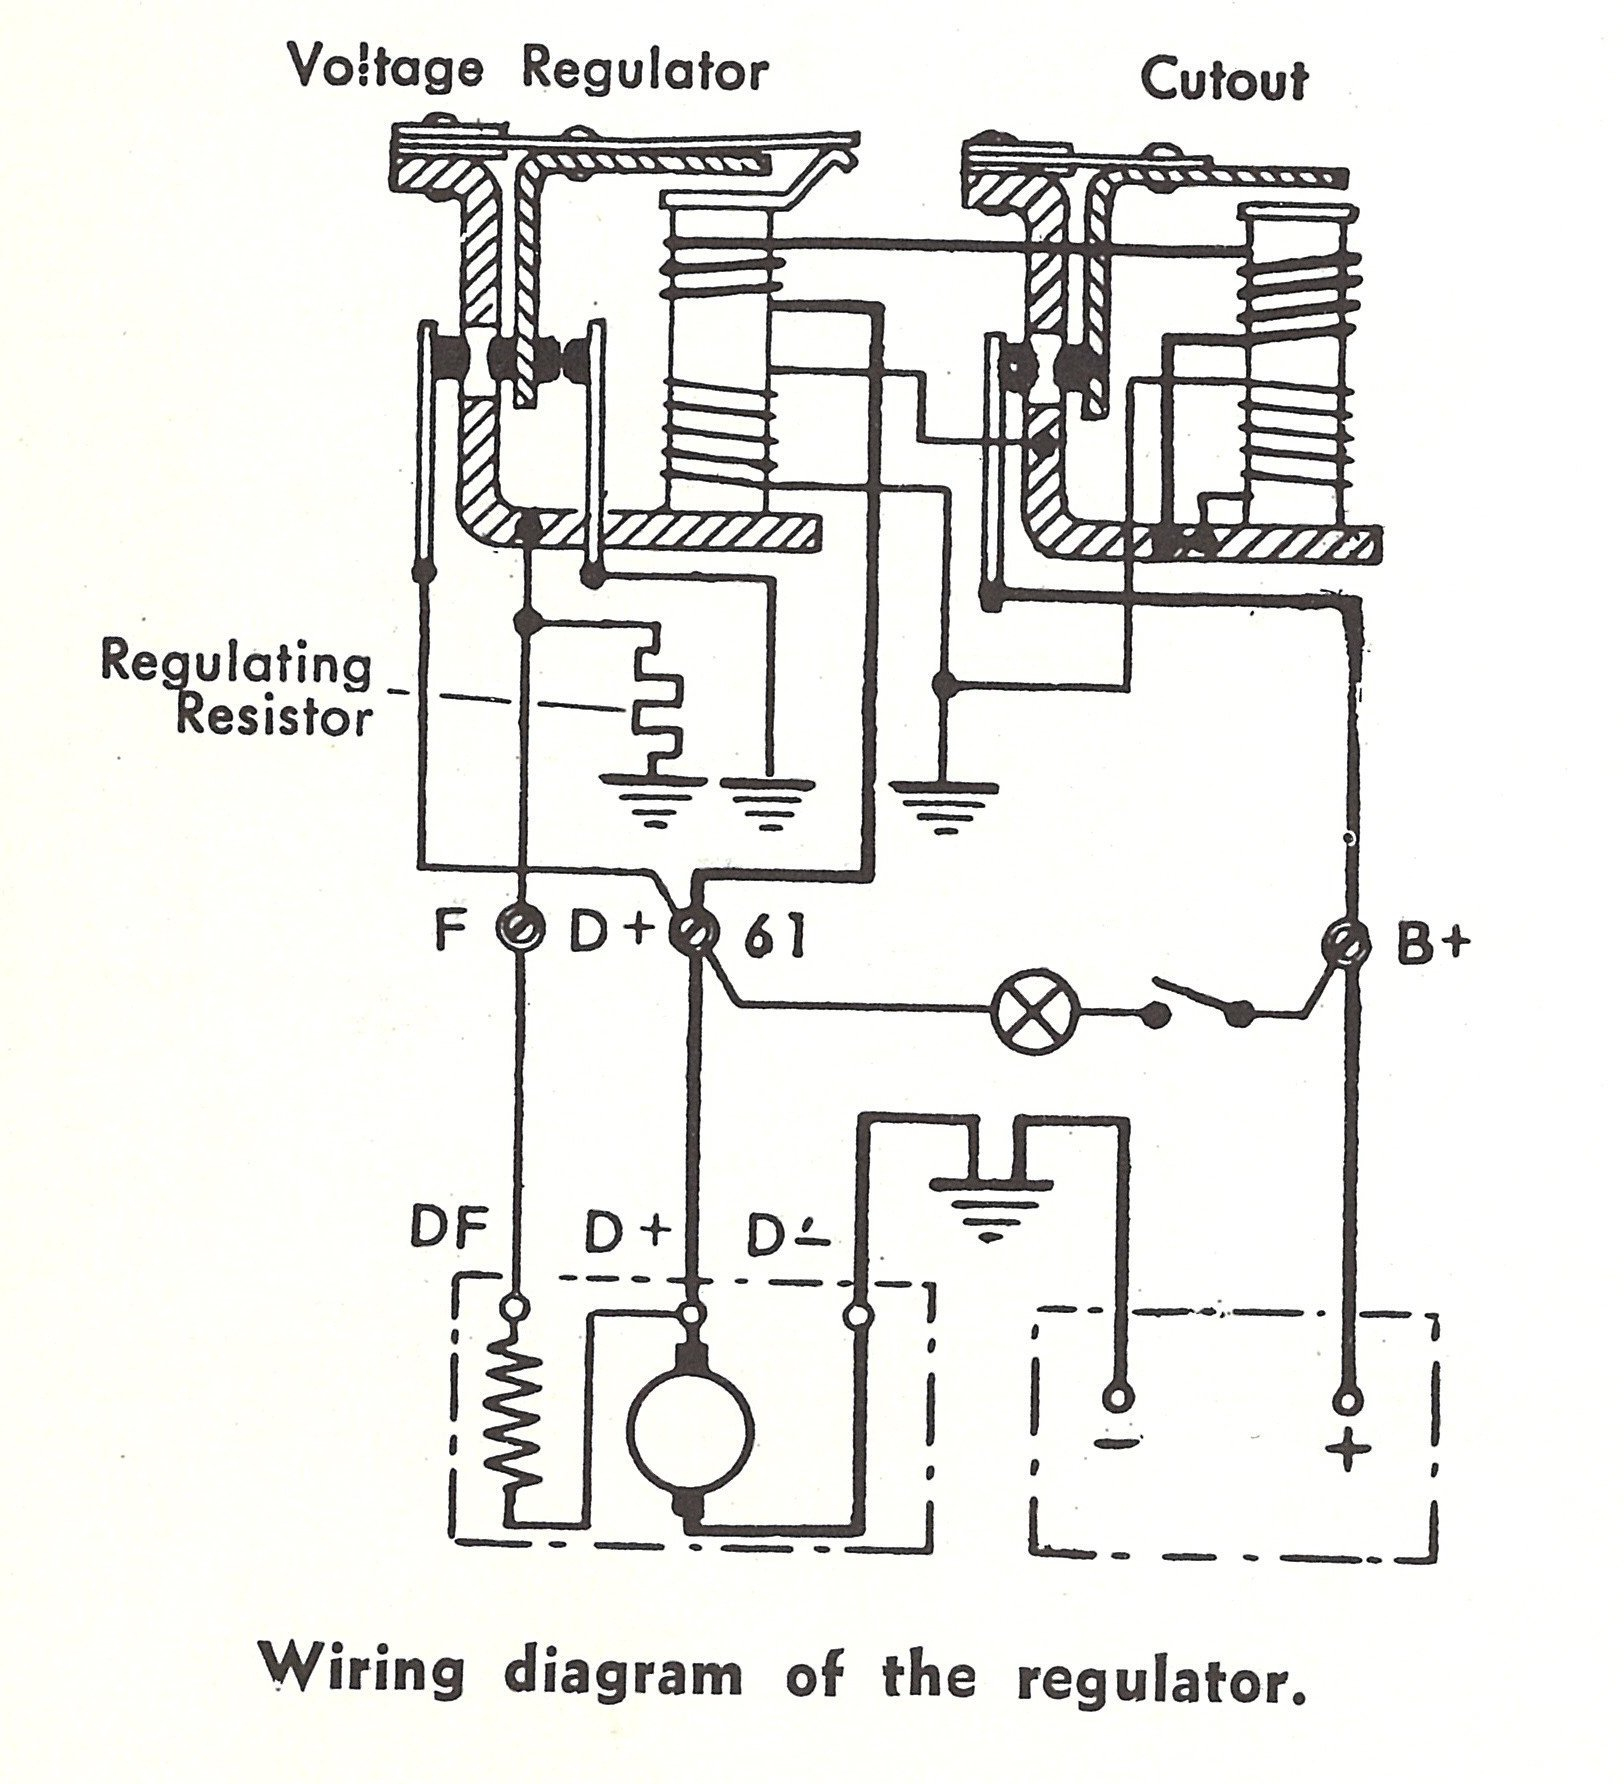 Voltage Ford Diagram Wiring Generator Regulatorto - Wiring Diagrams Hubs - Voltage Regulator Wiring Diagram